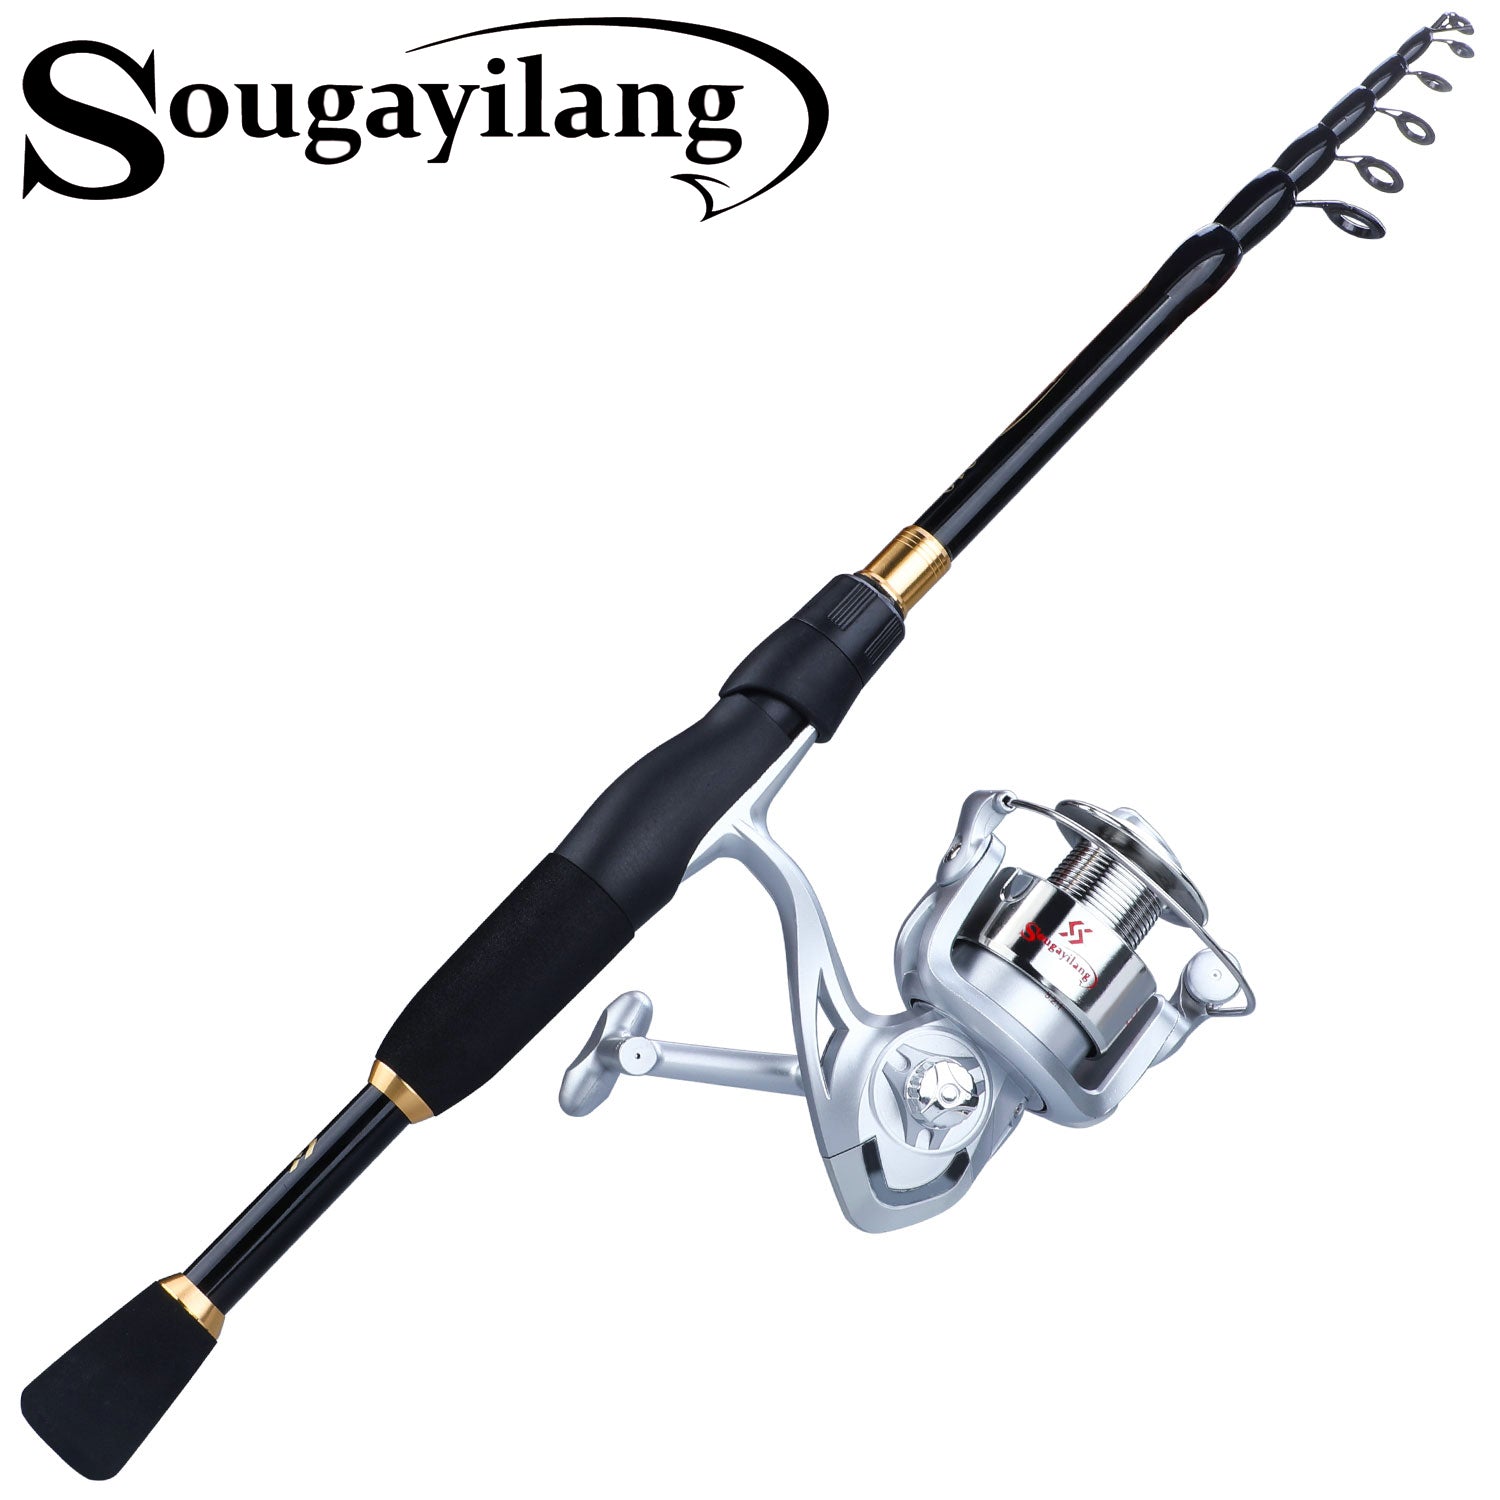 Sougayilang 1.8-2.4m Telescopic Fishing Rod and Spinning Reel